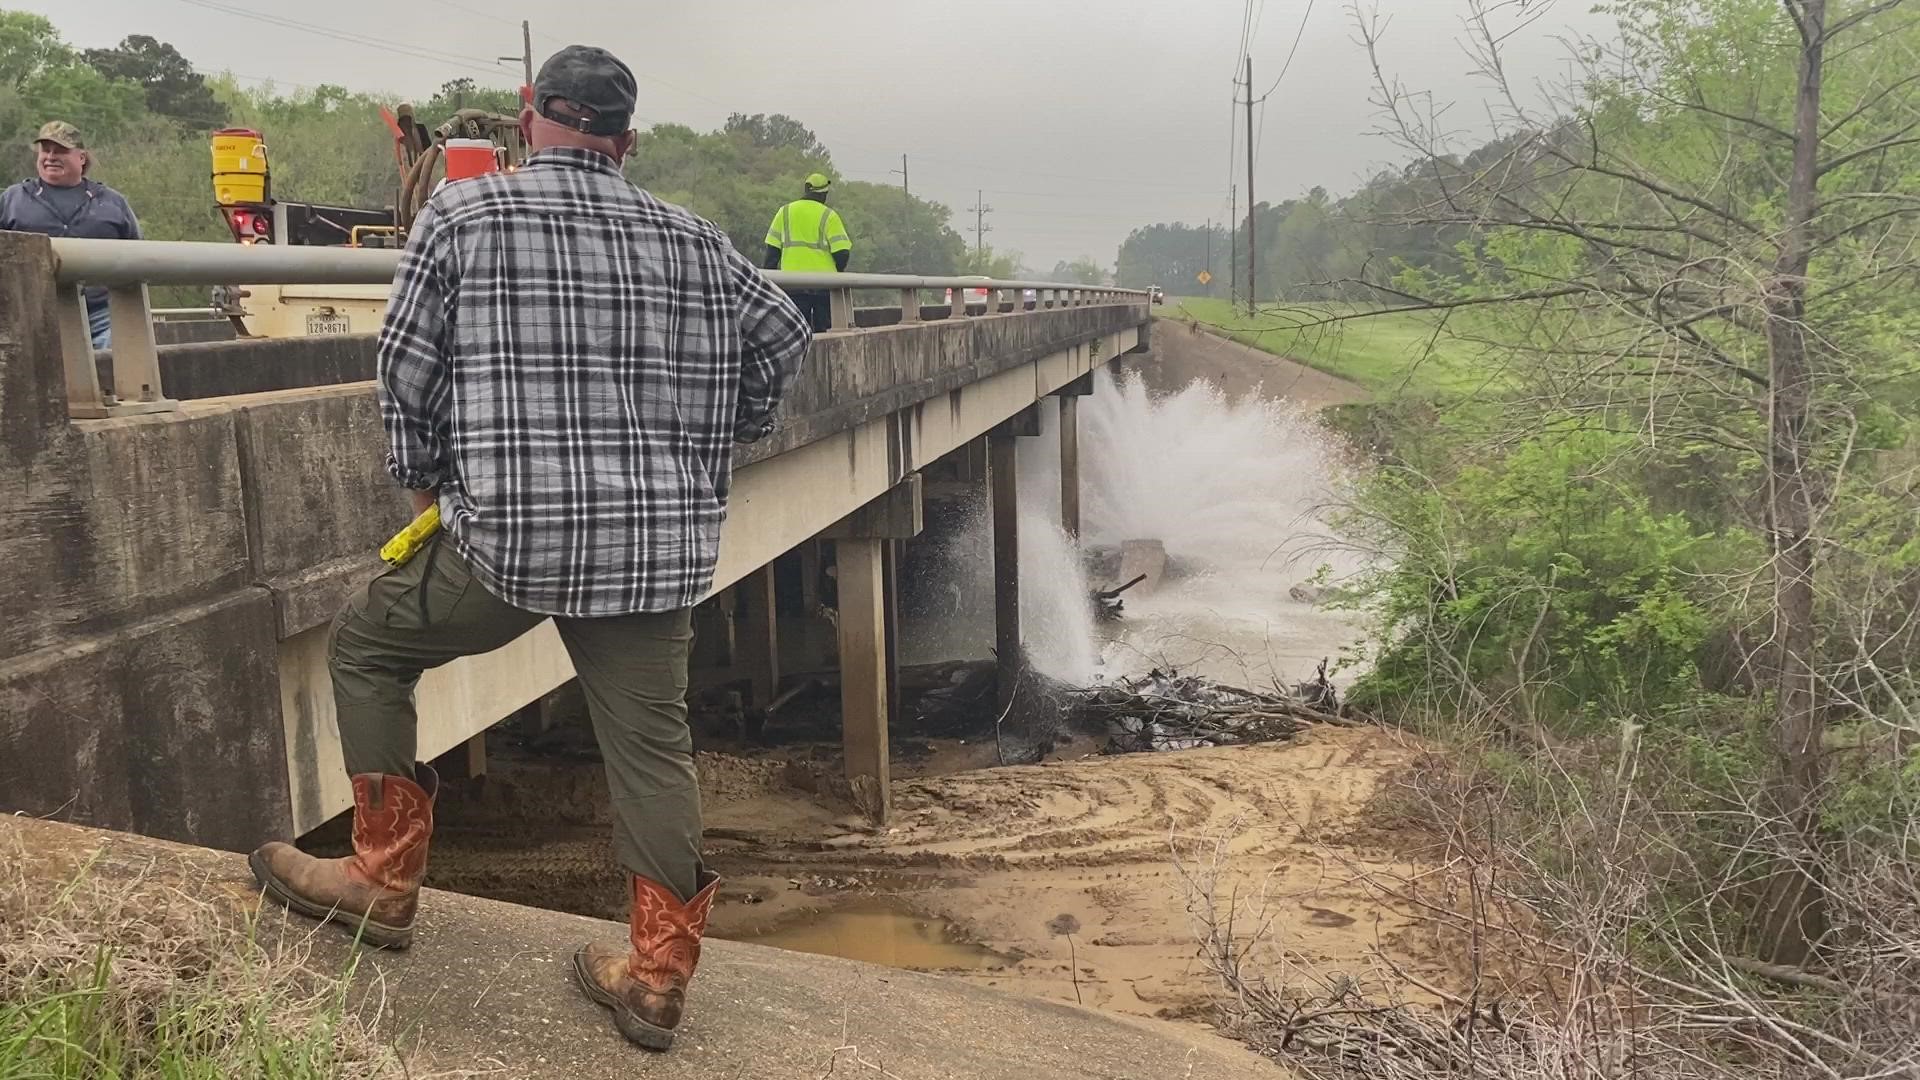 Video footage of the water main break in Longview